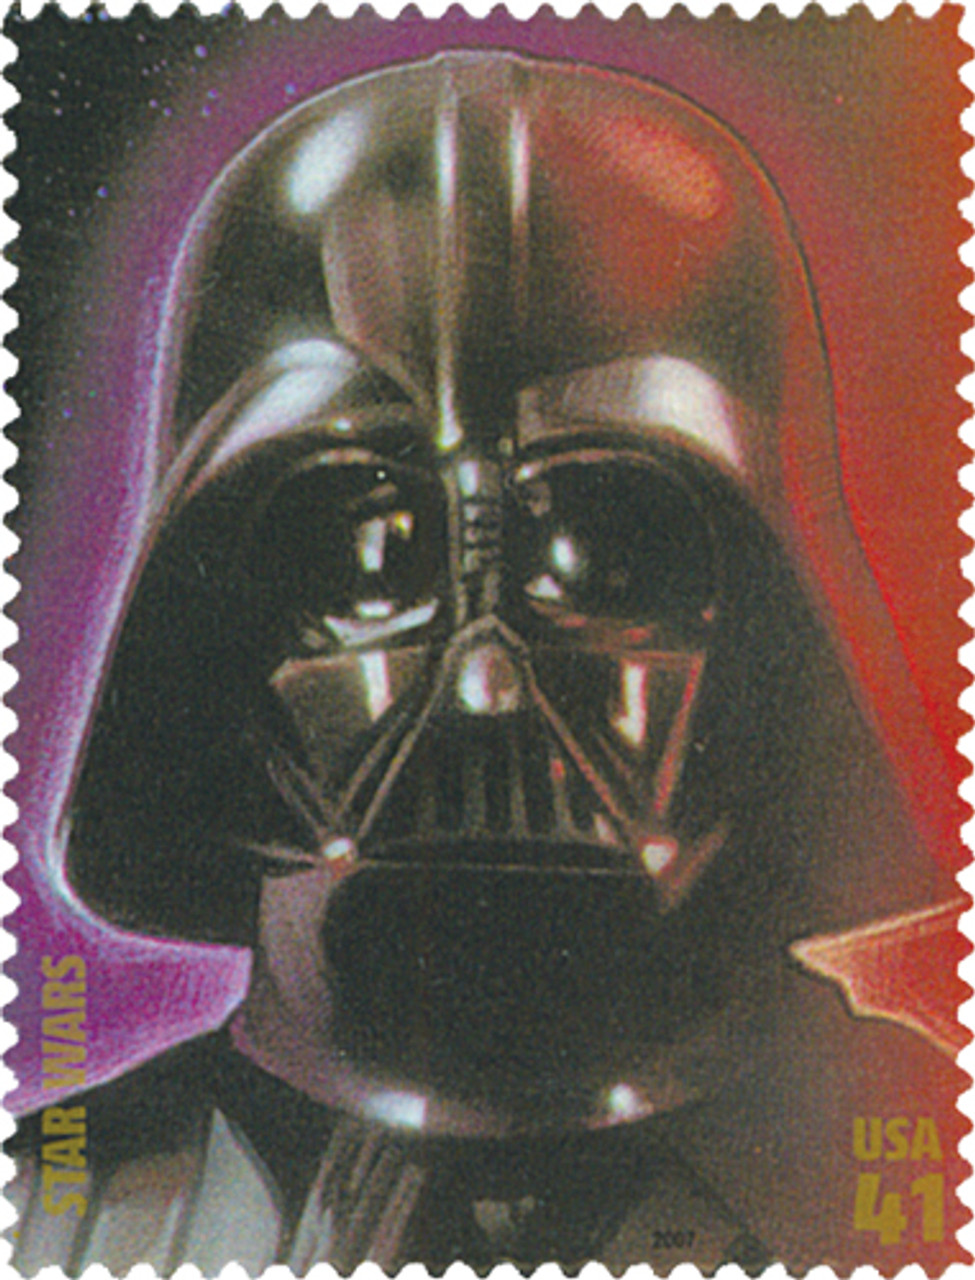 4143a - 2007 41c Star Wars: Darth Vader - Mystic Stamp Company